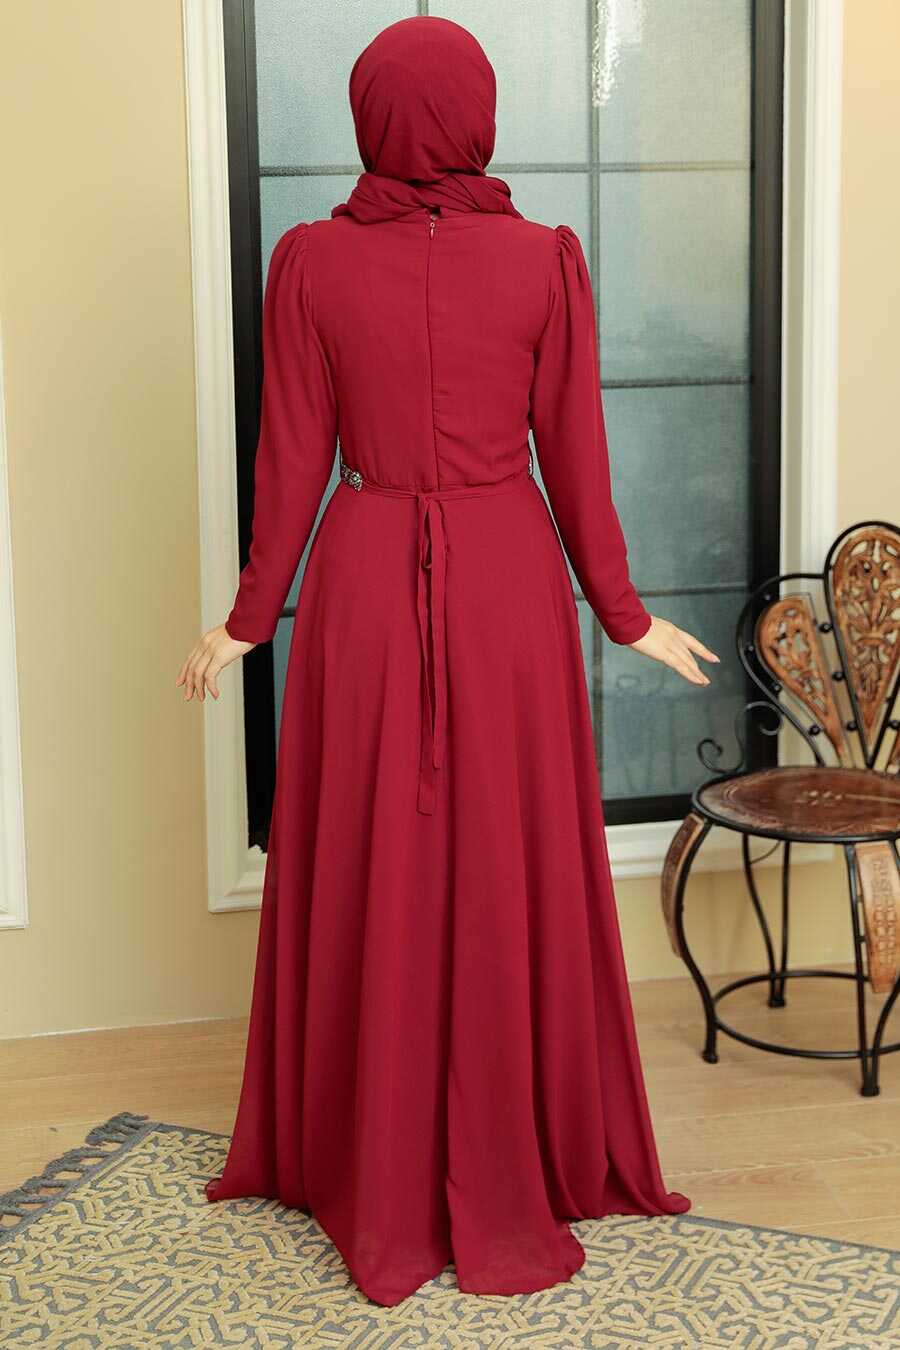 Neva Style - Plus Size Claret Red Islamic Long Sleeve Dress 5737BR